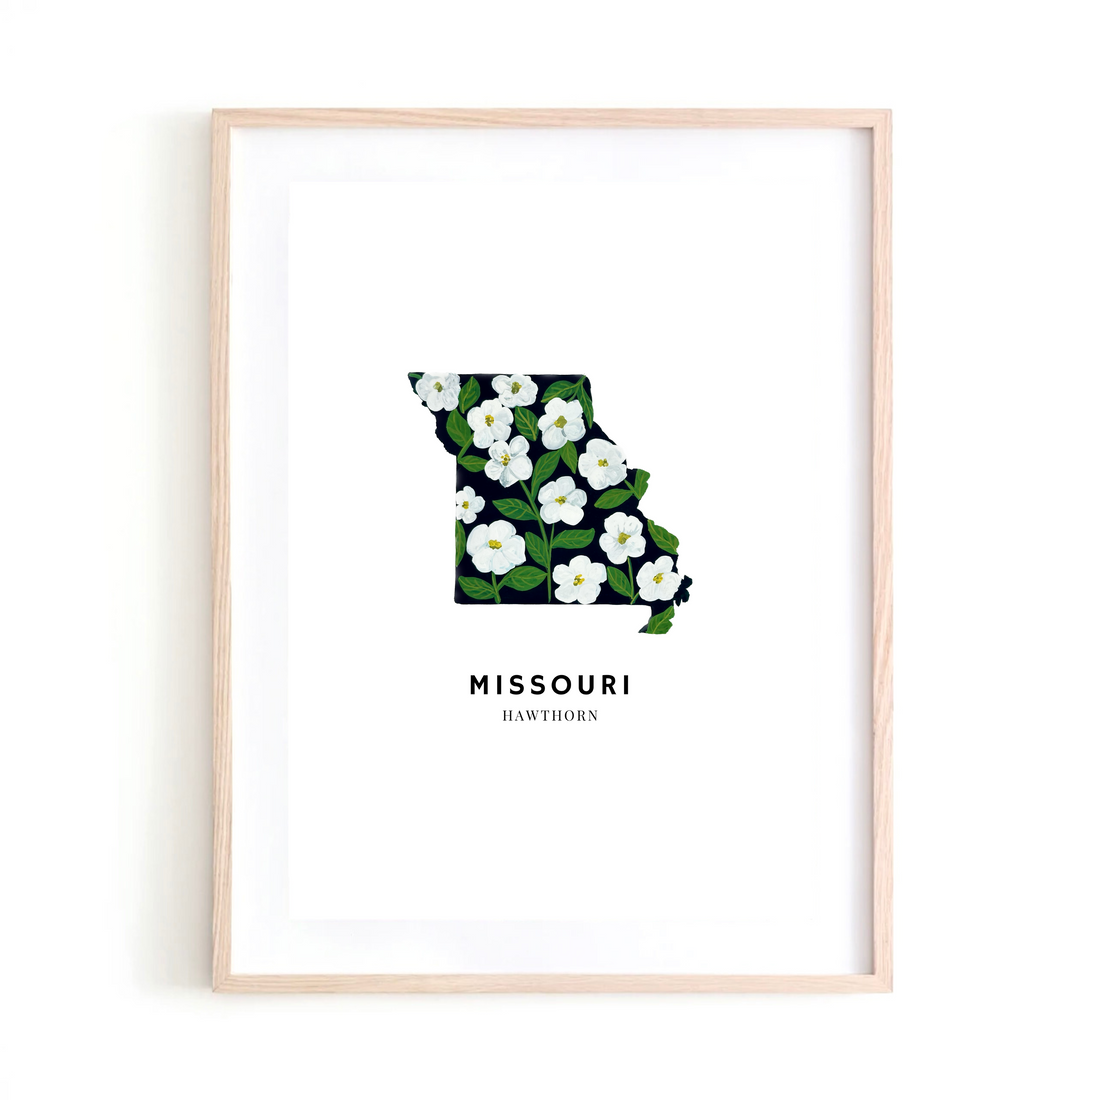 Missouri State Flower art print